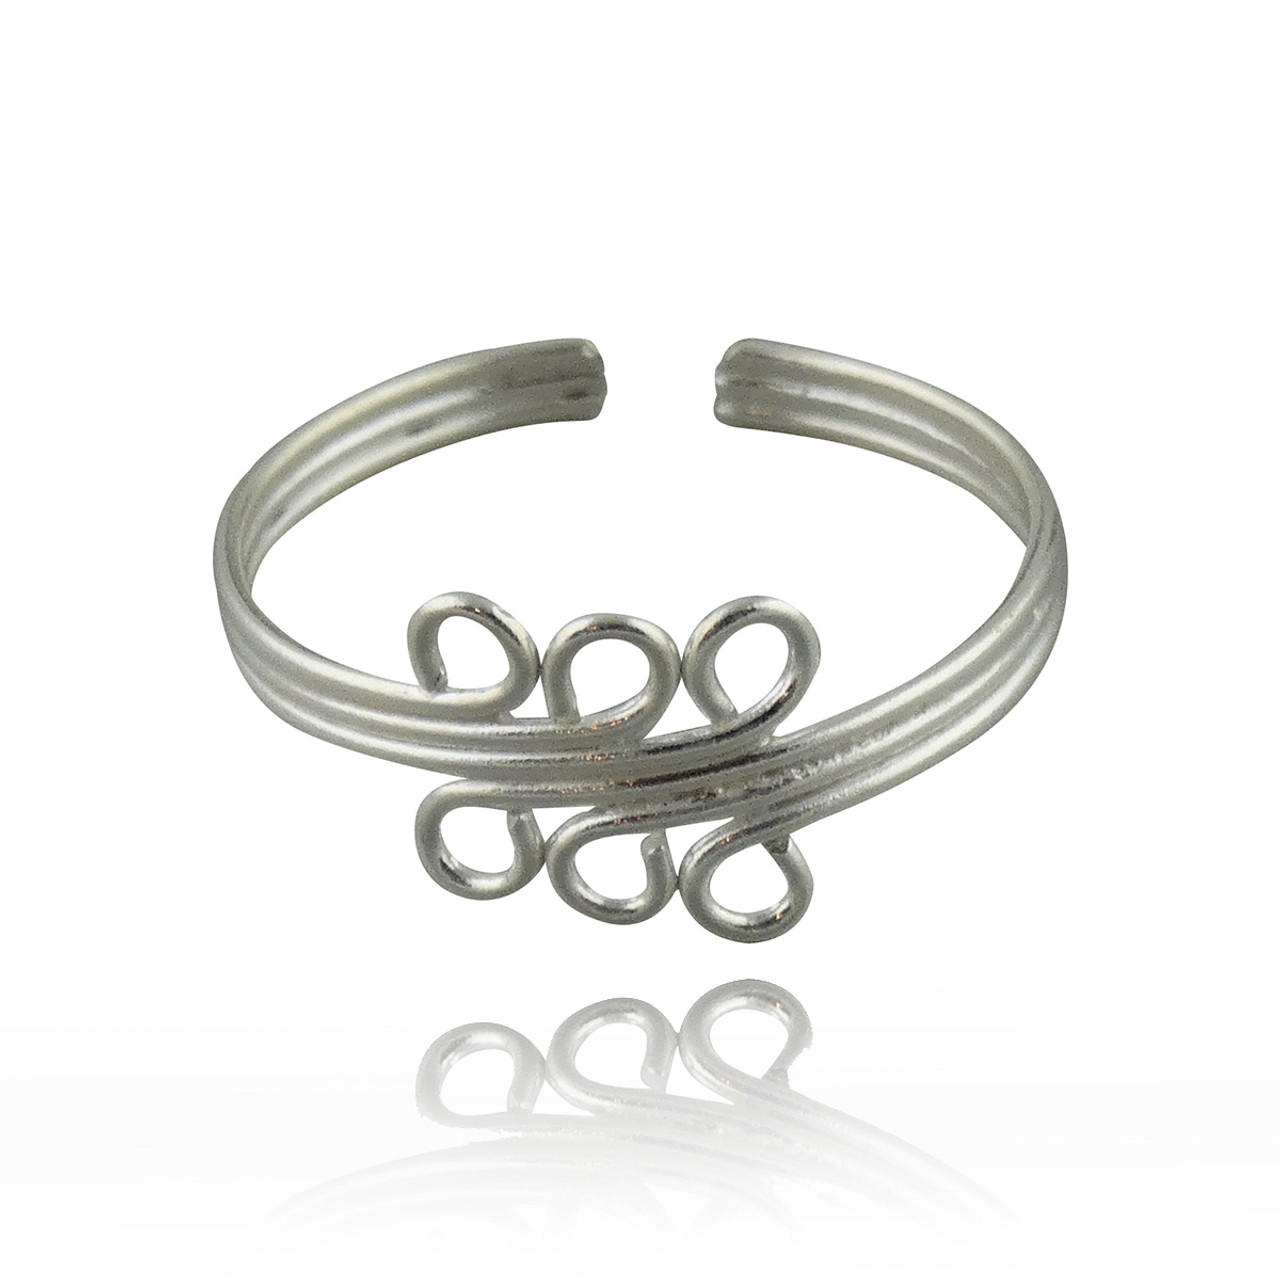 Silver Double Swirl Toe Ring Sterling Silver 925 Best Deal Adjustable Jewelry